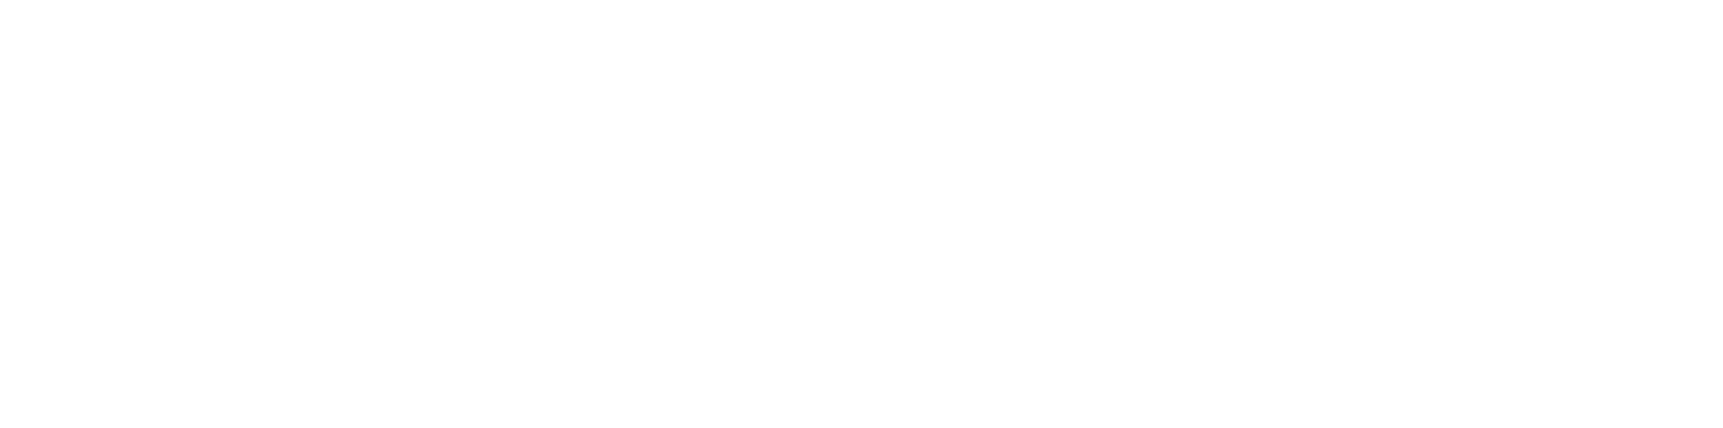 Digital Courtrooms